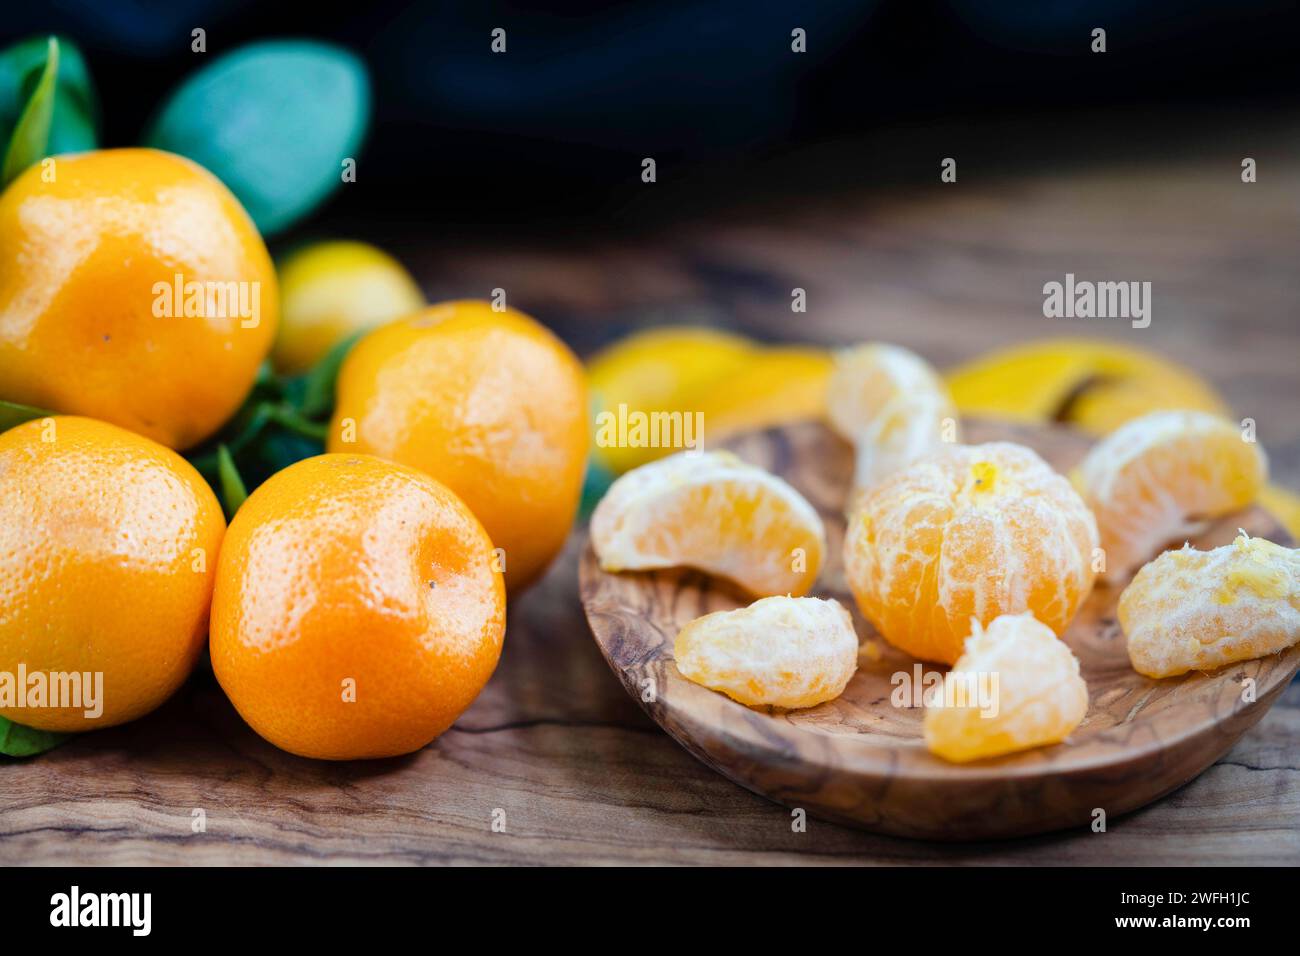 Calamondin, Calomondin, Camalmansi (Citrus madurensis, Citrofortunella microcarpa, Citrus fortunella, Citrus mitis), Fruit on the table, partly peeled Stock Photo